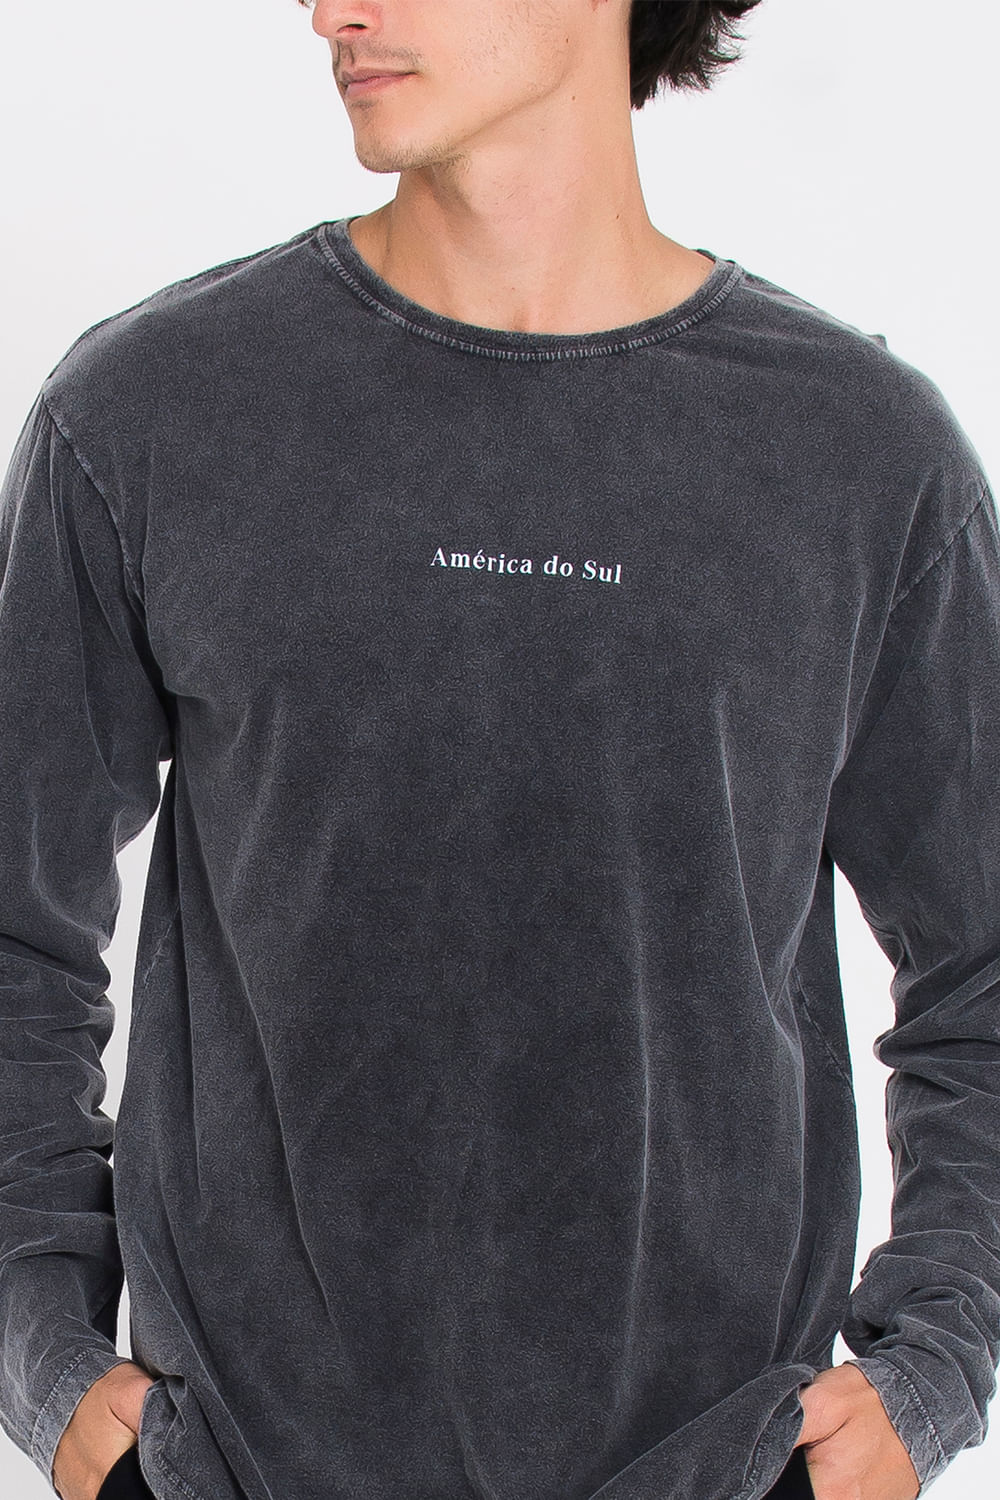 Camiseta-ML-America-Do-Sul-Lettering-Preto-Detalhe